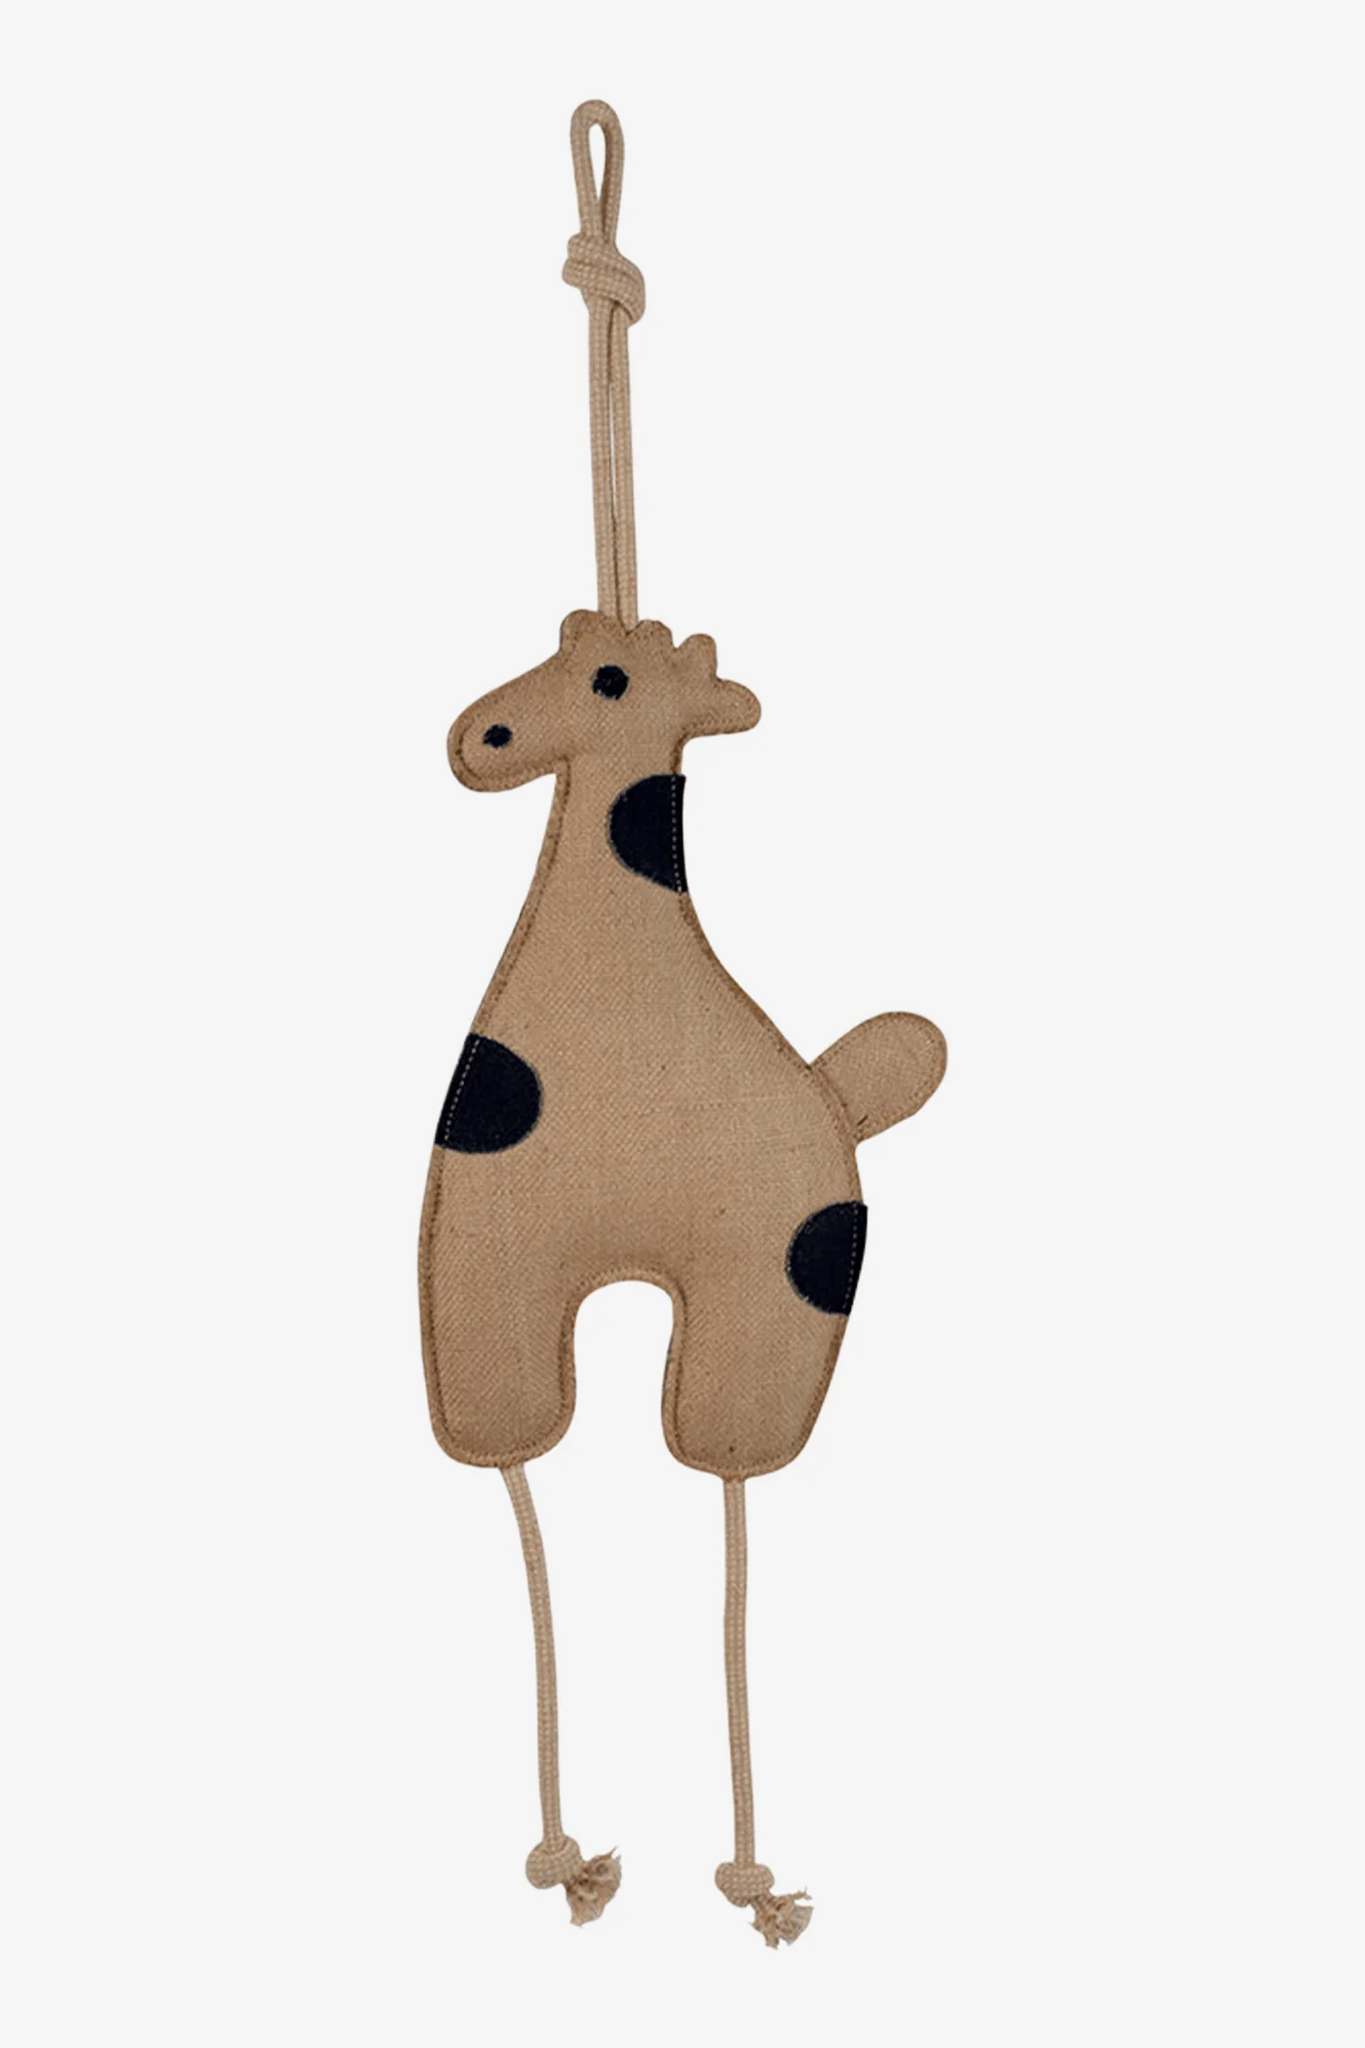 Horse Toy Giraff